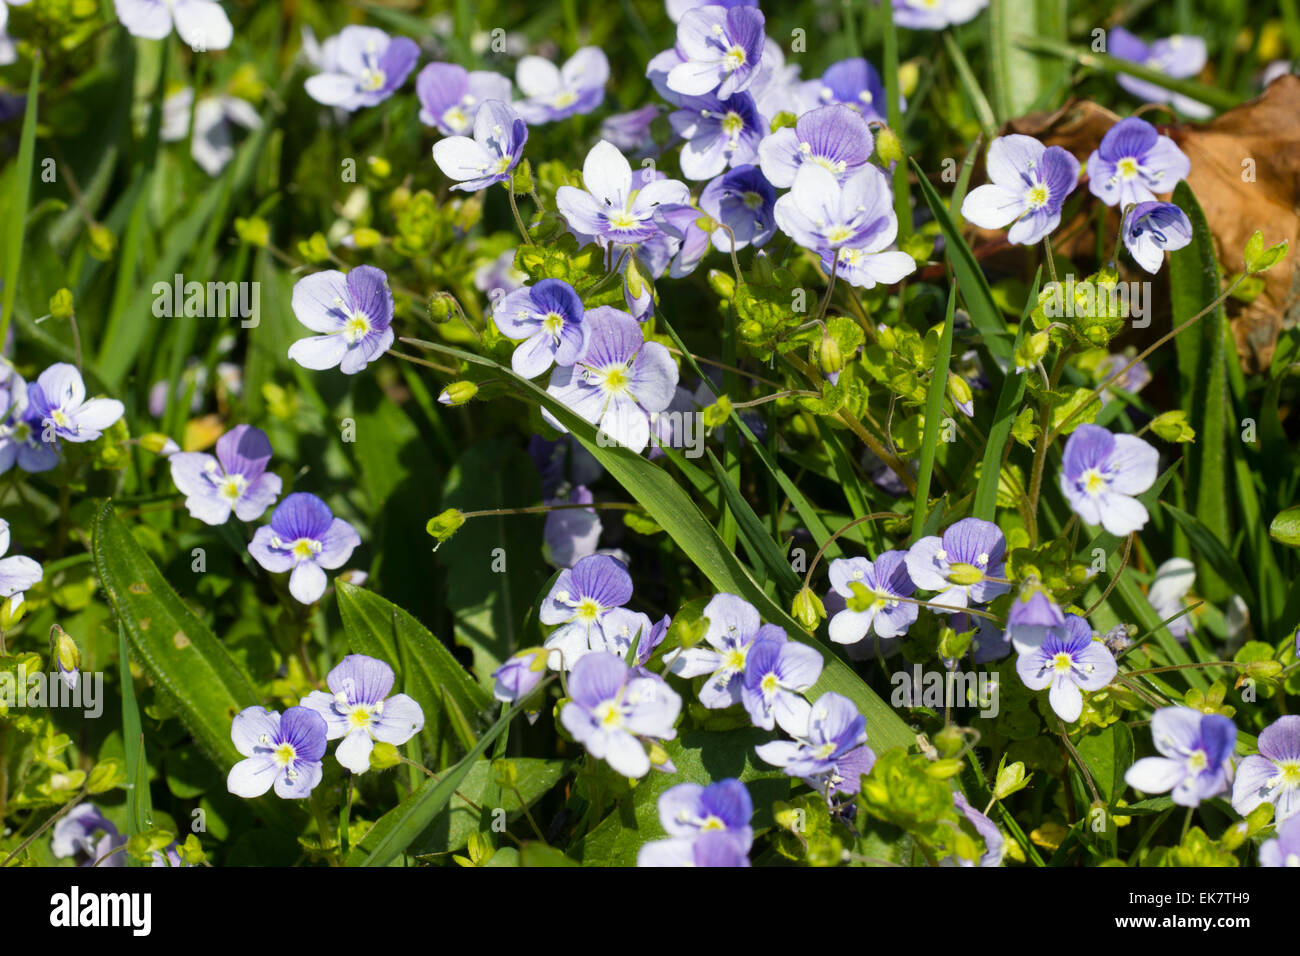 Massed flowers of the slender speedwell, Veronica filiformis, a naturalised UK wildflower. Stock Photo